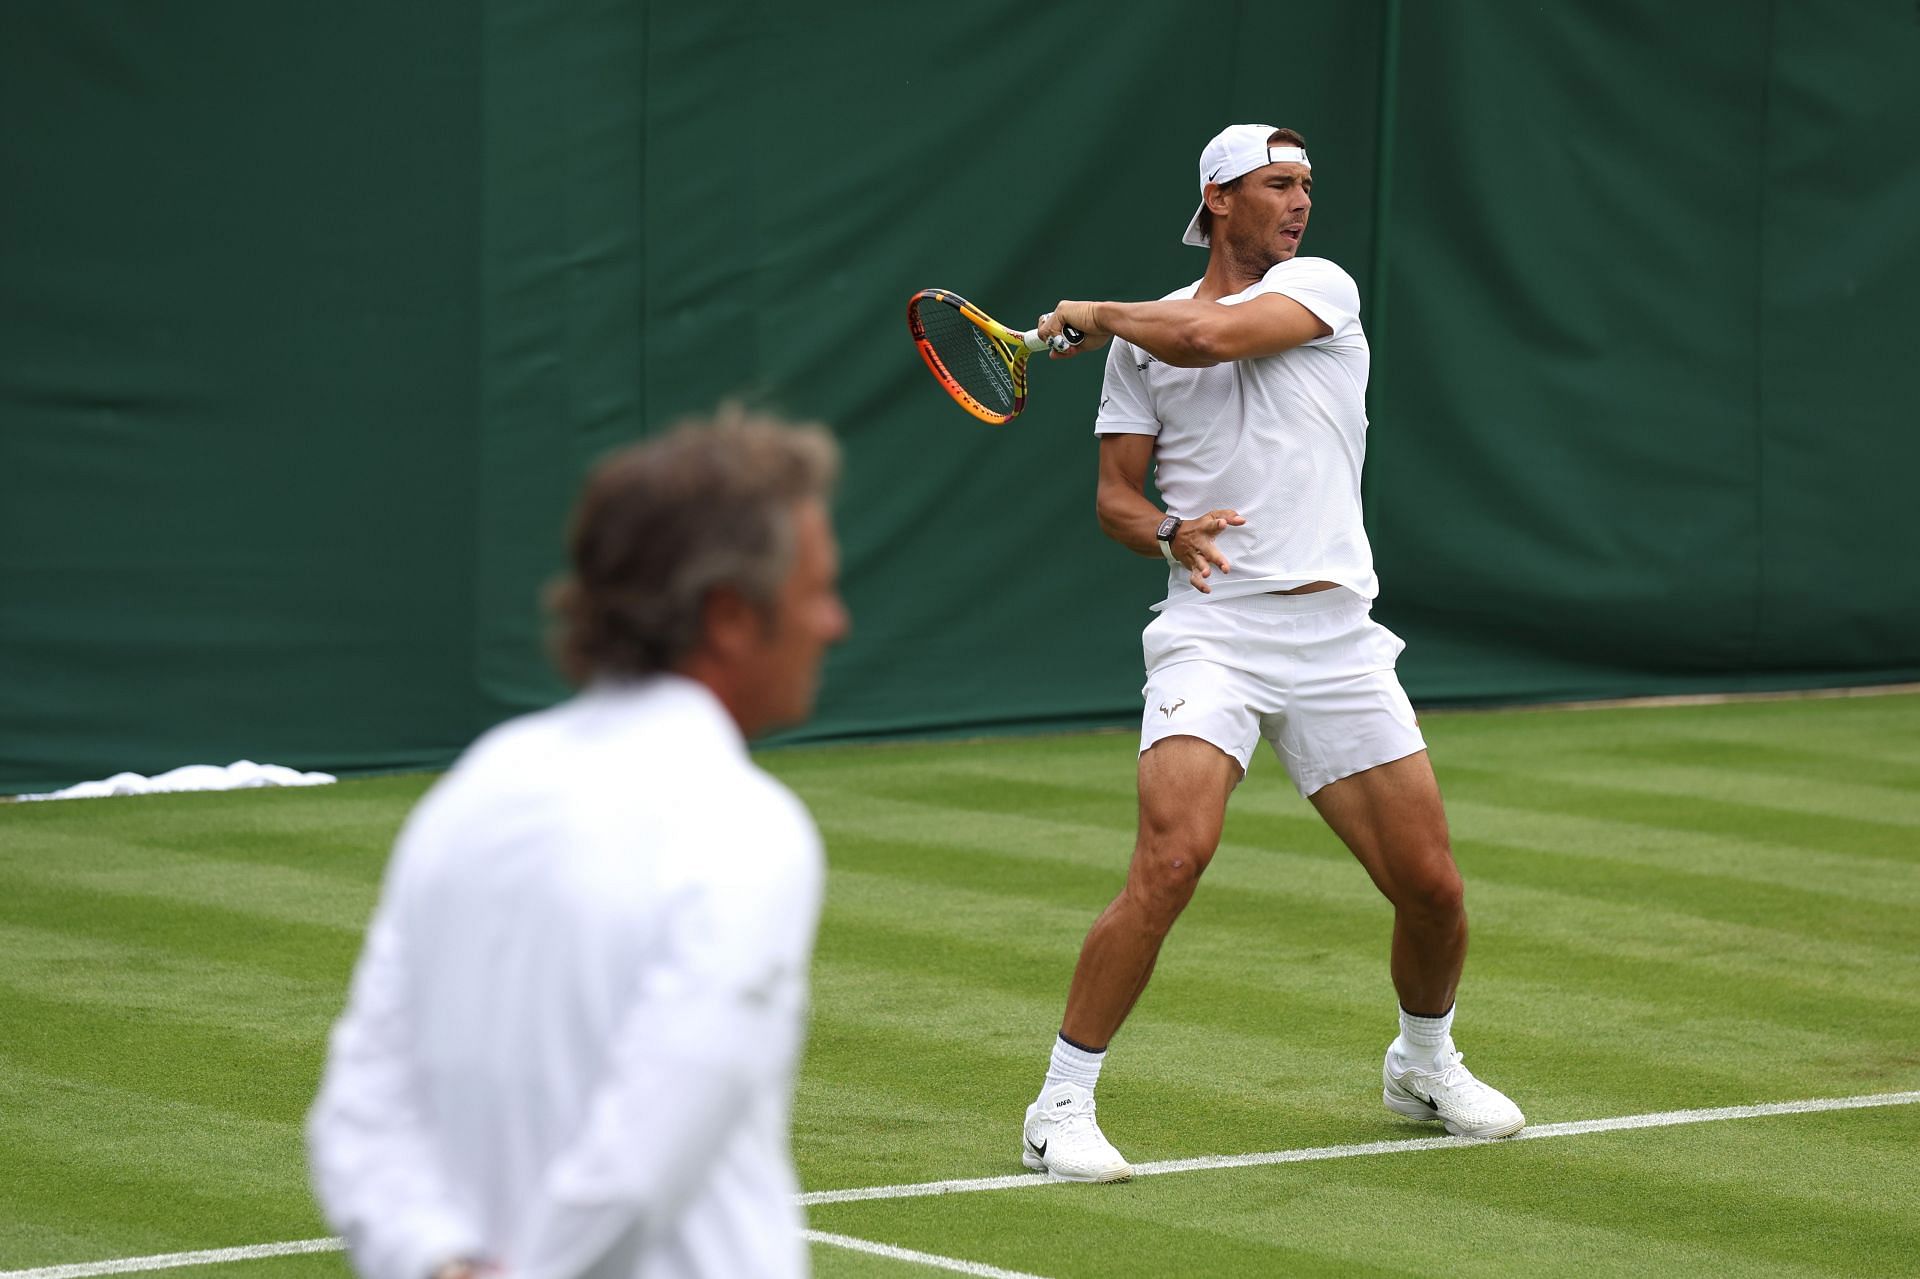 Rafael Nadal faces Taylor Frttz in the Wimbledon quarterfinals on Wednesday